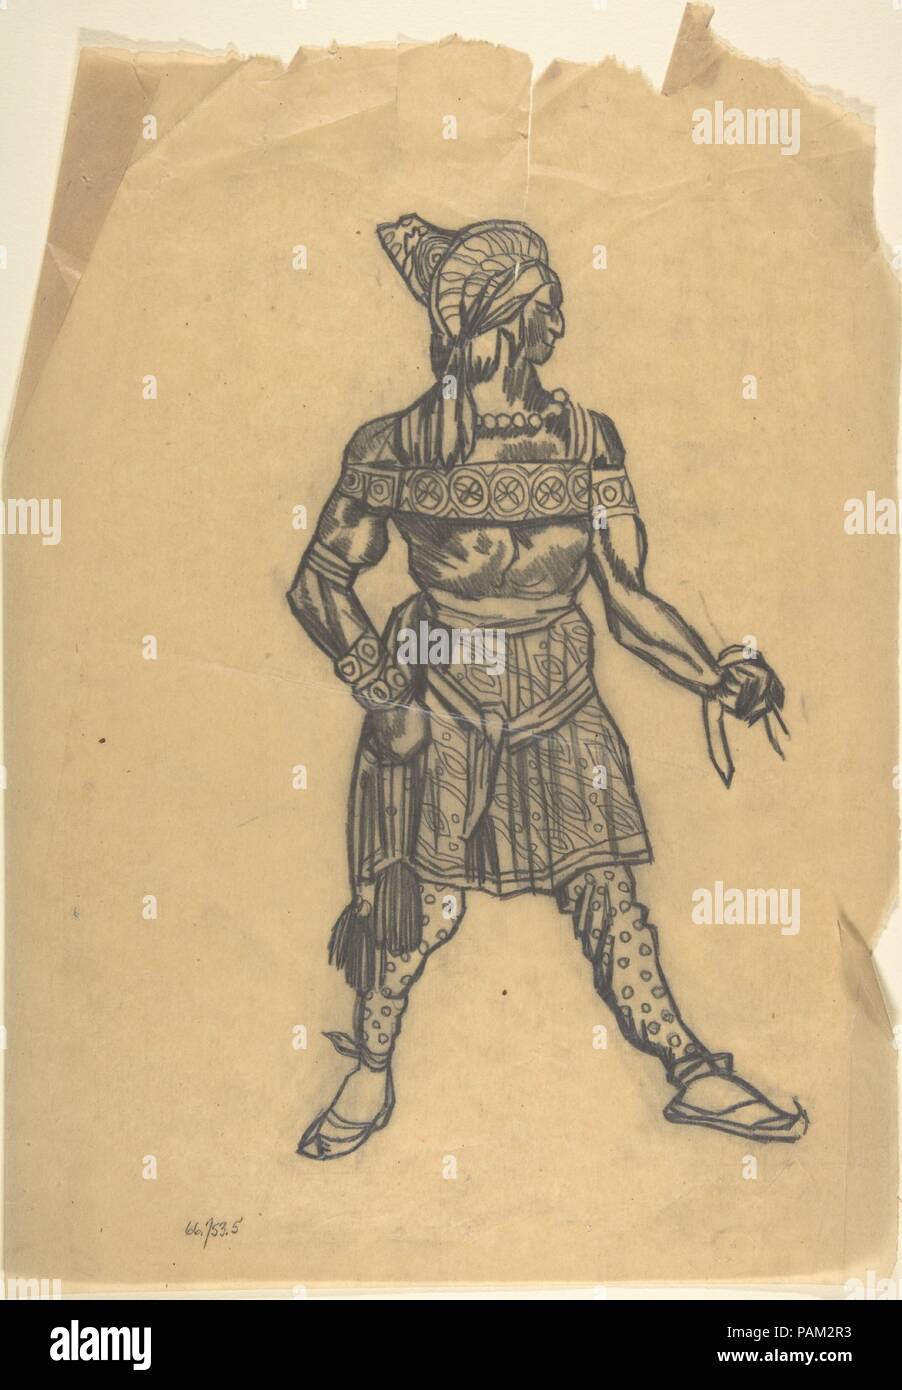 Russian male dancer costume. Artist: Léon Bakst (Russian, Grodno 1866-1924 Paris). Dimensions: sheet: 14 15/16 x 10 11/16 in. (38 x 27.2 cm). Date: n.d.. Museum: Metropolitan Museum of Art, New York, USA. Stock Photo